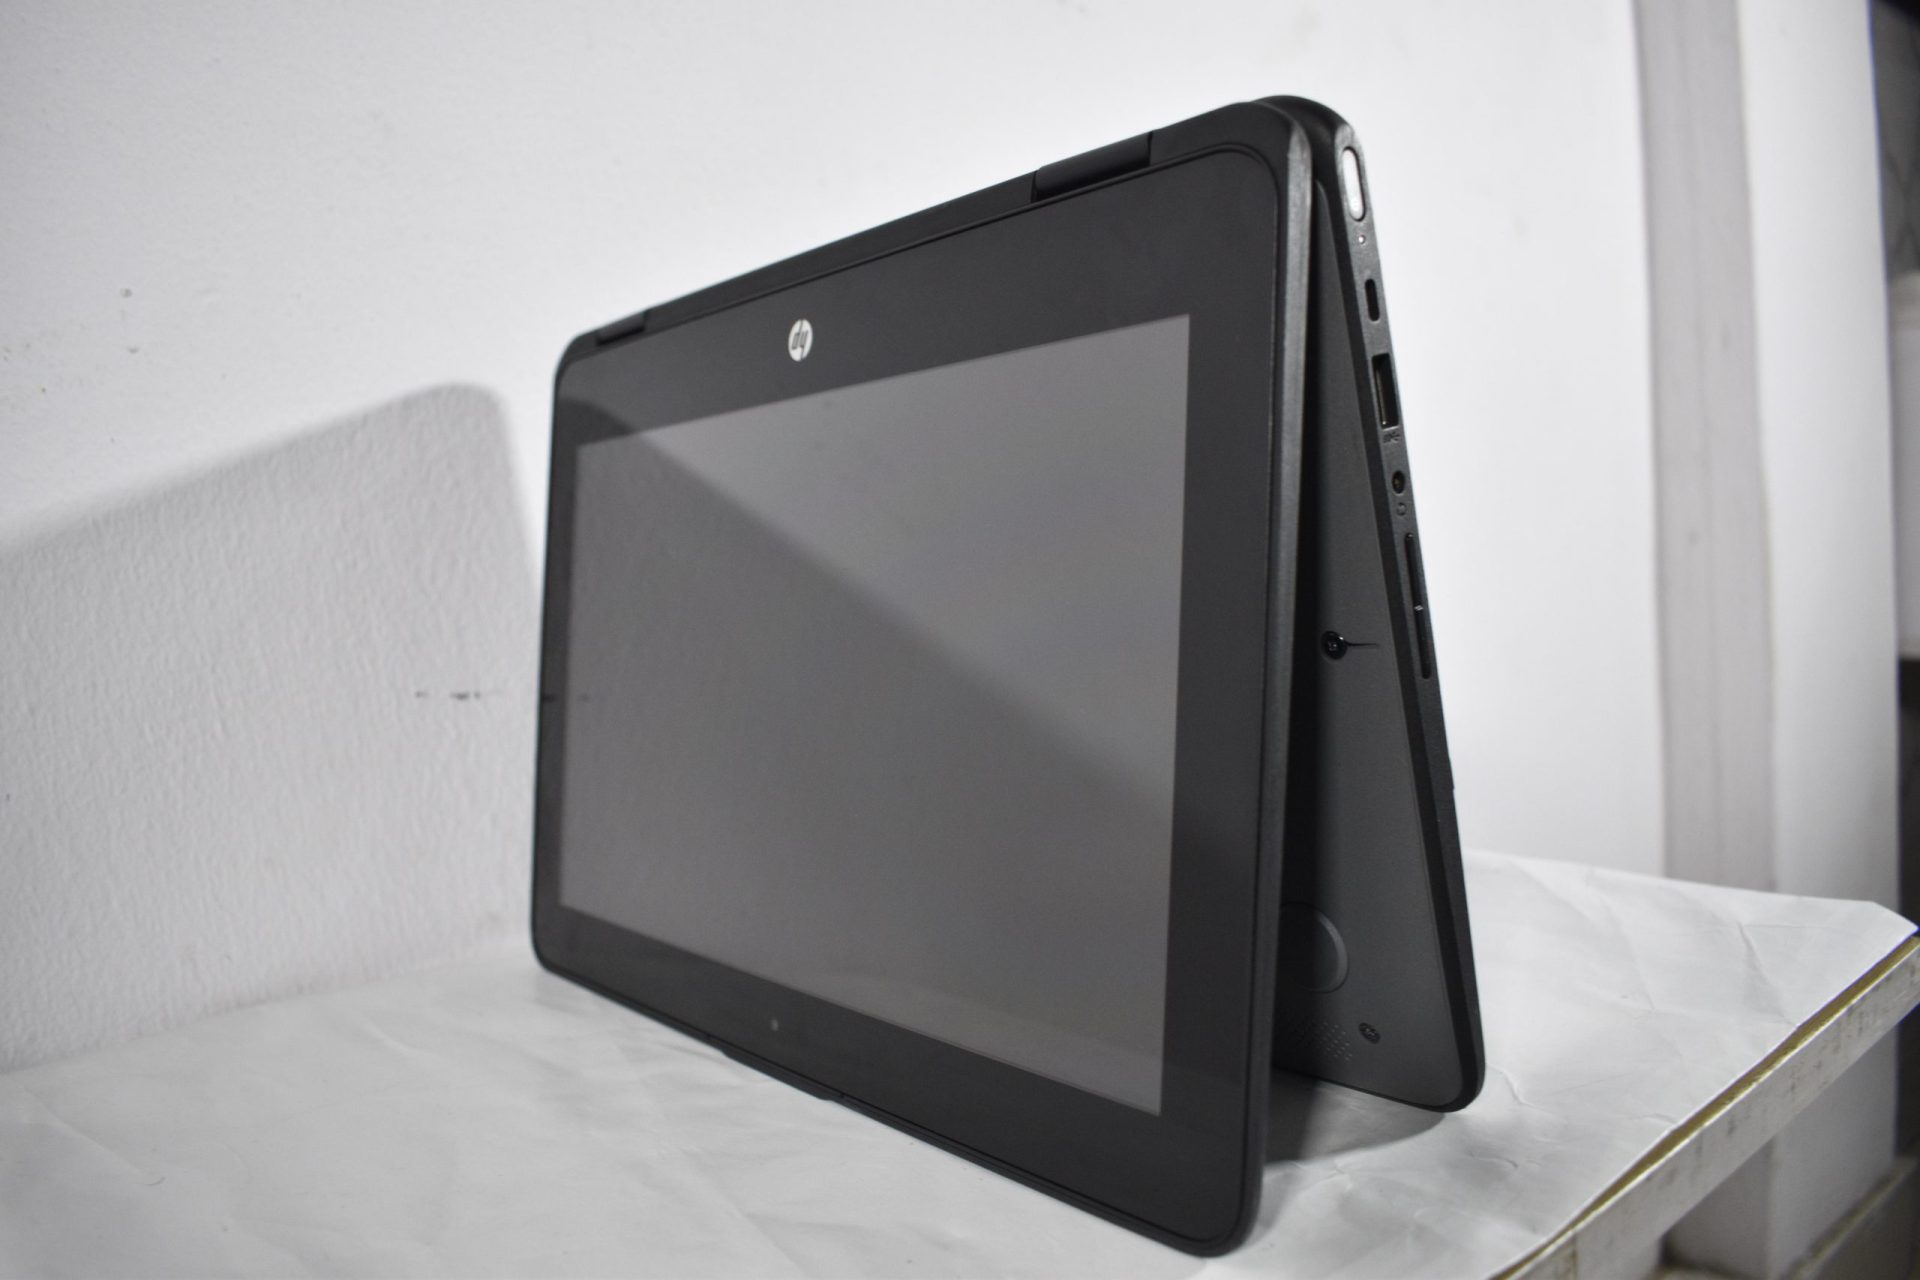 HP ProBook x360 11 G2 Intel Core m3 convertible